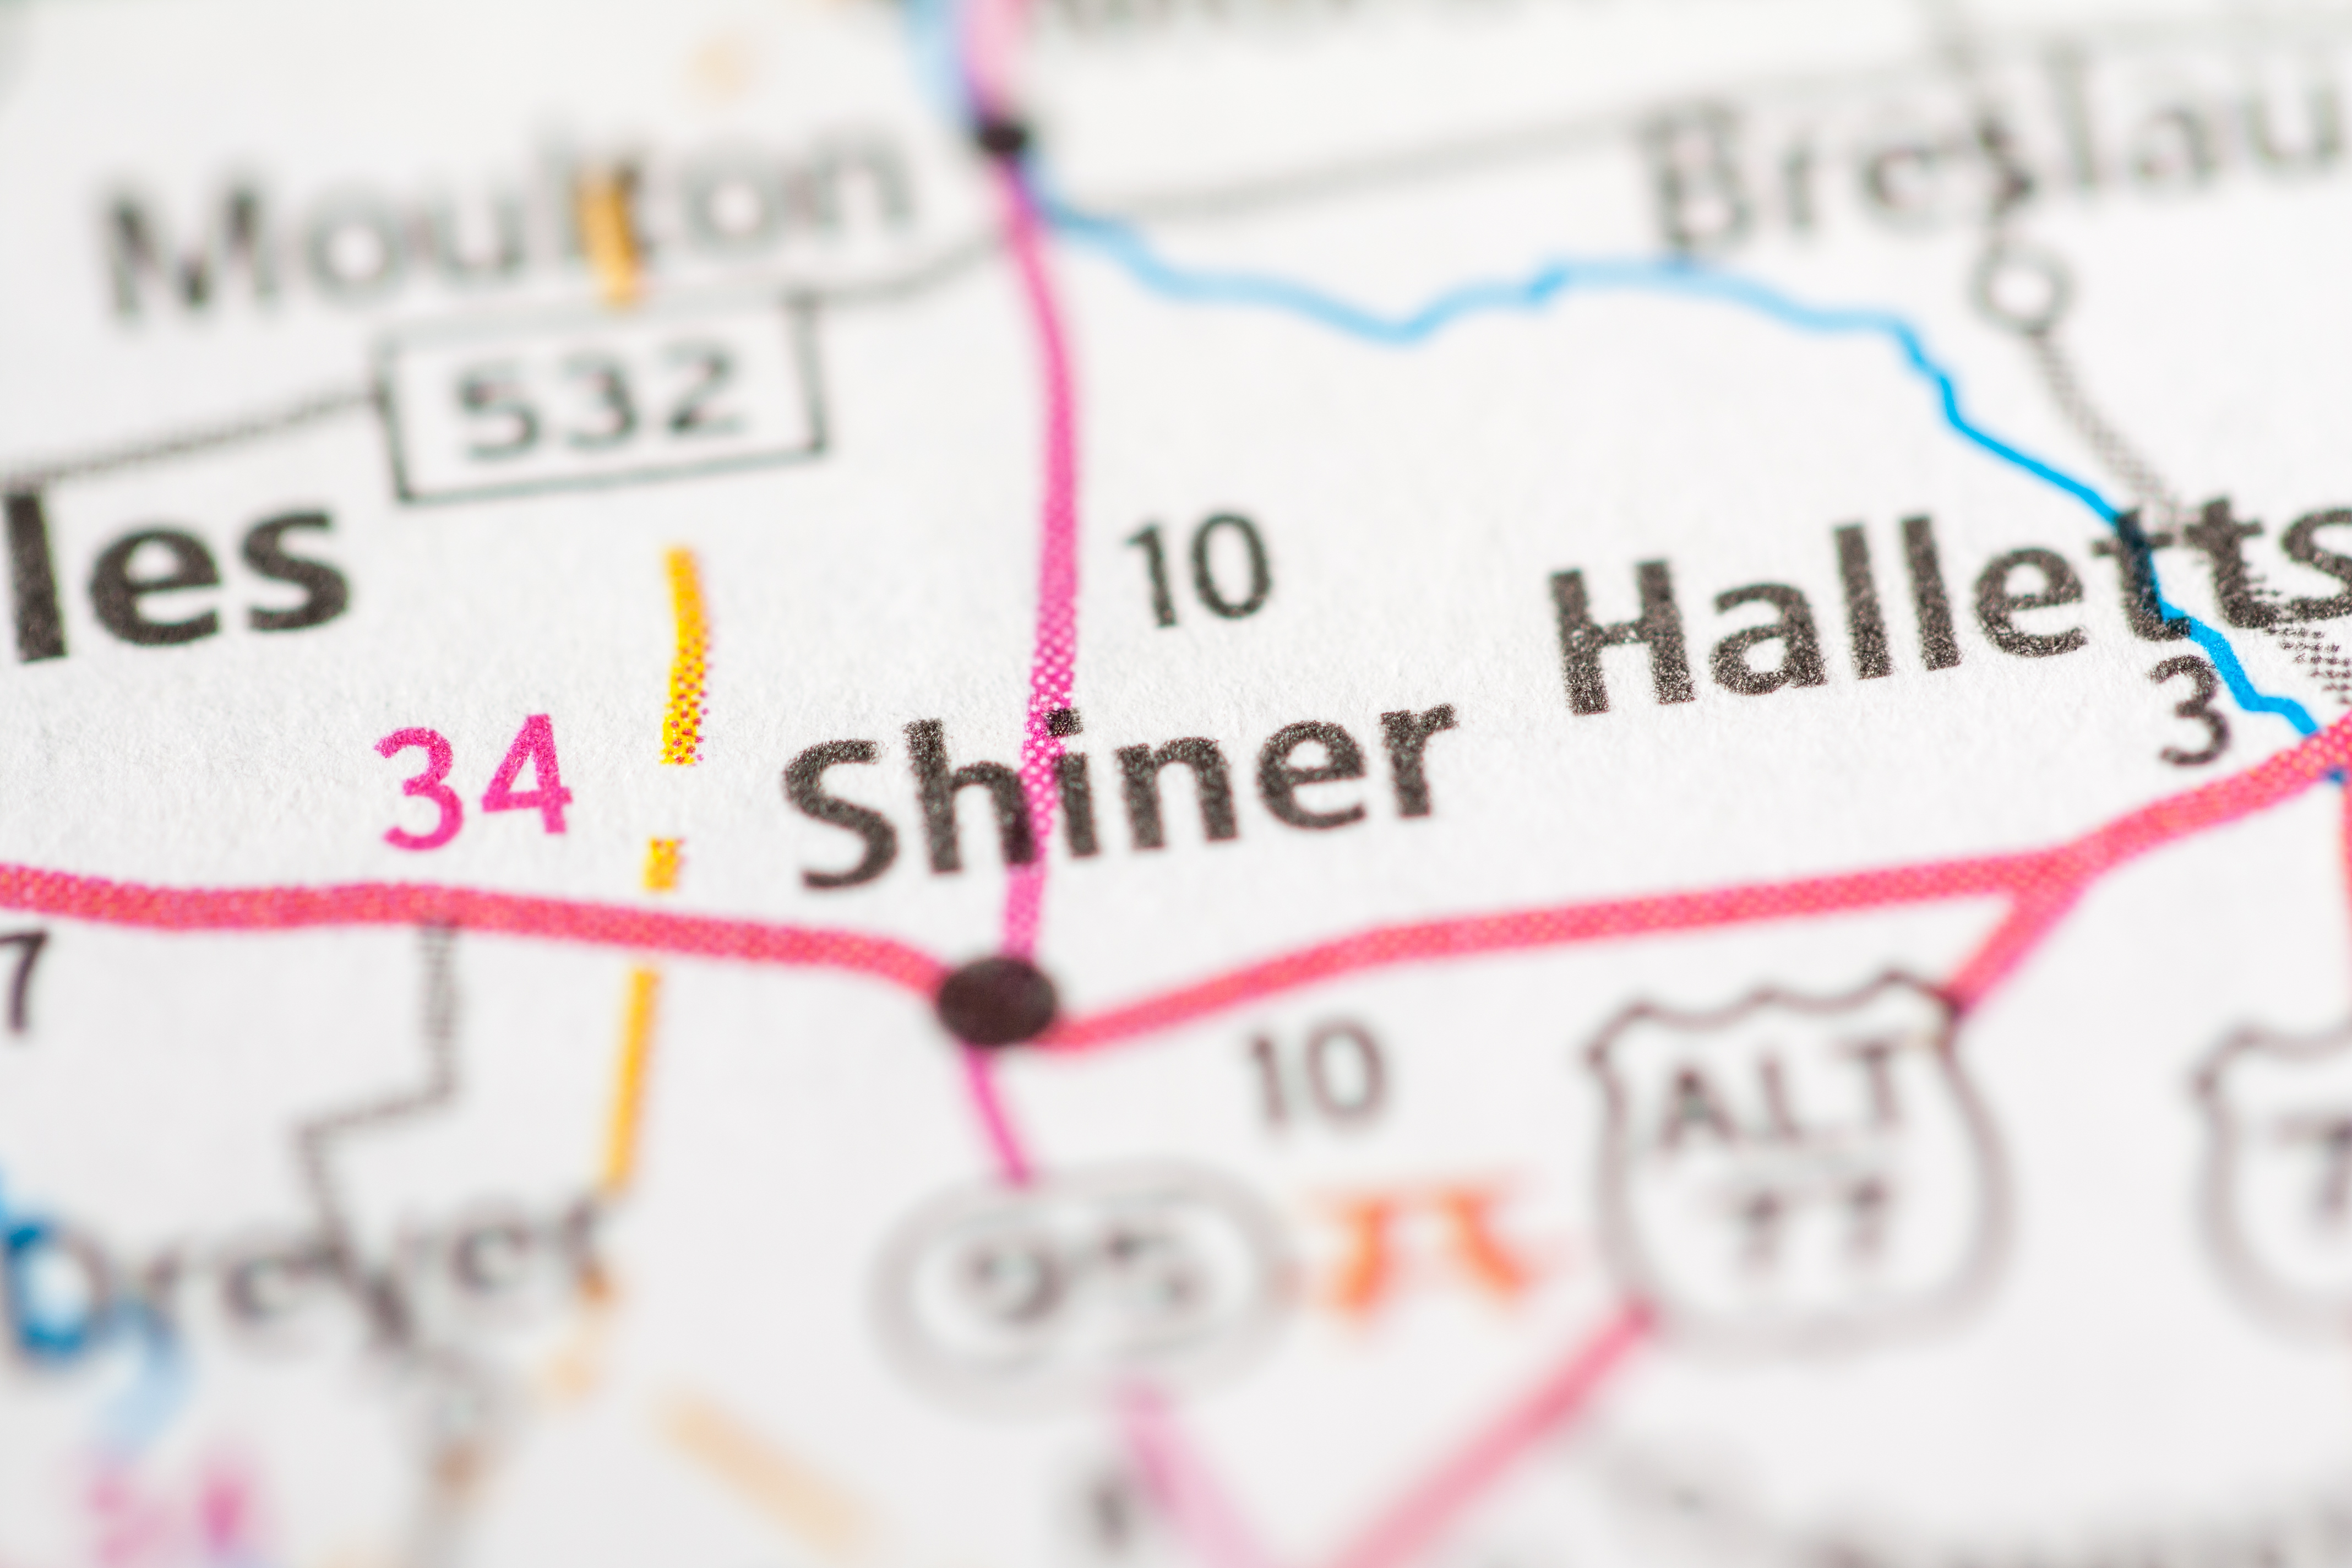 Shiner Texas